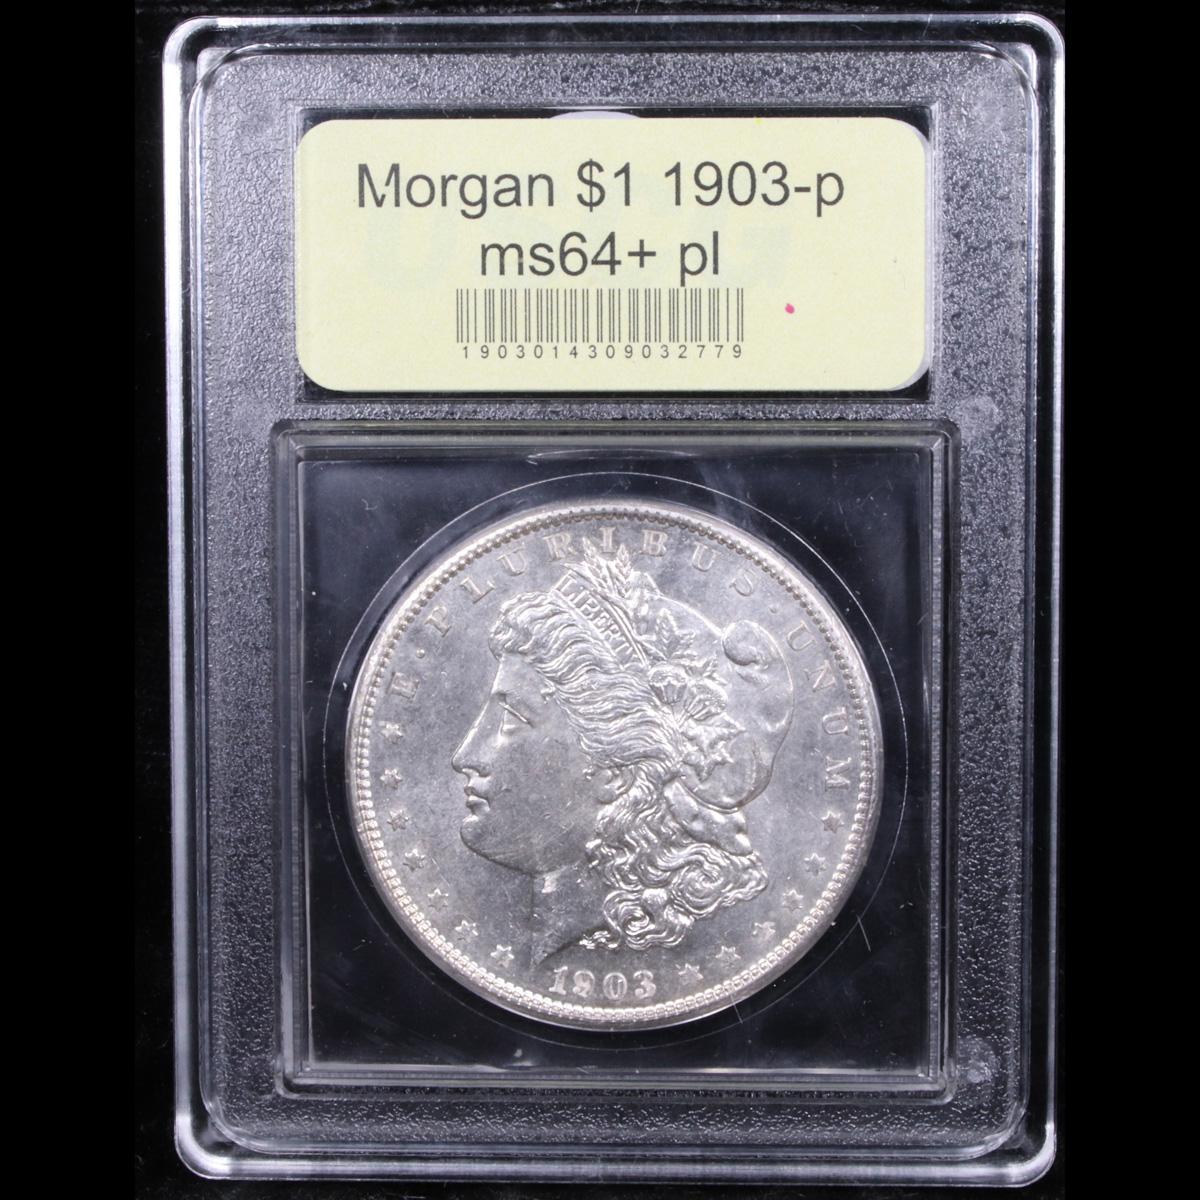 ***Auction Highlight*** 1903-p Morgan Dollar $1 Graded Choice Unc+ PL By USCG (fc)